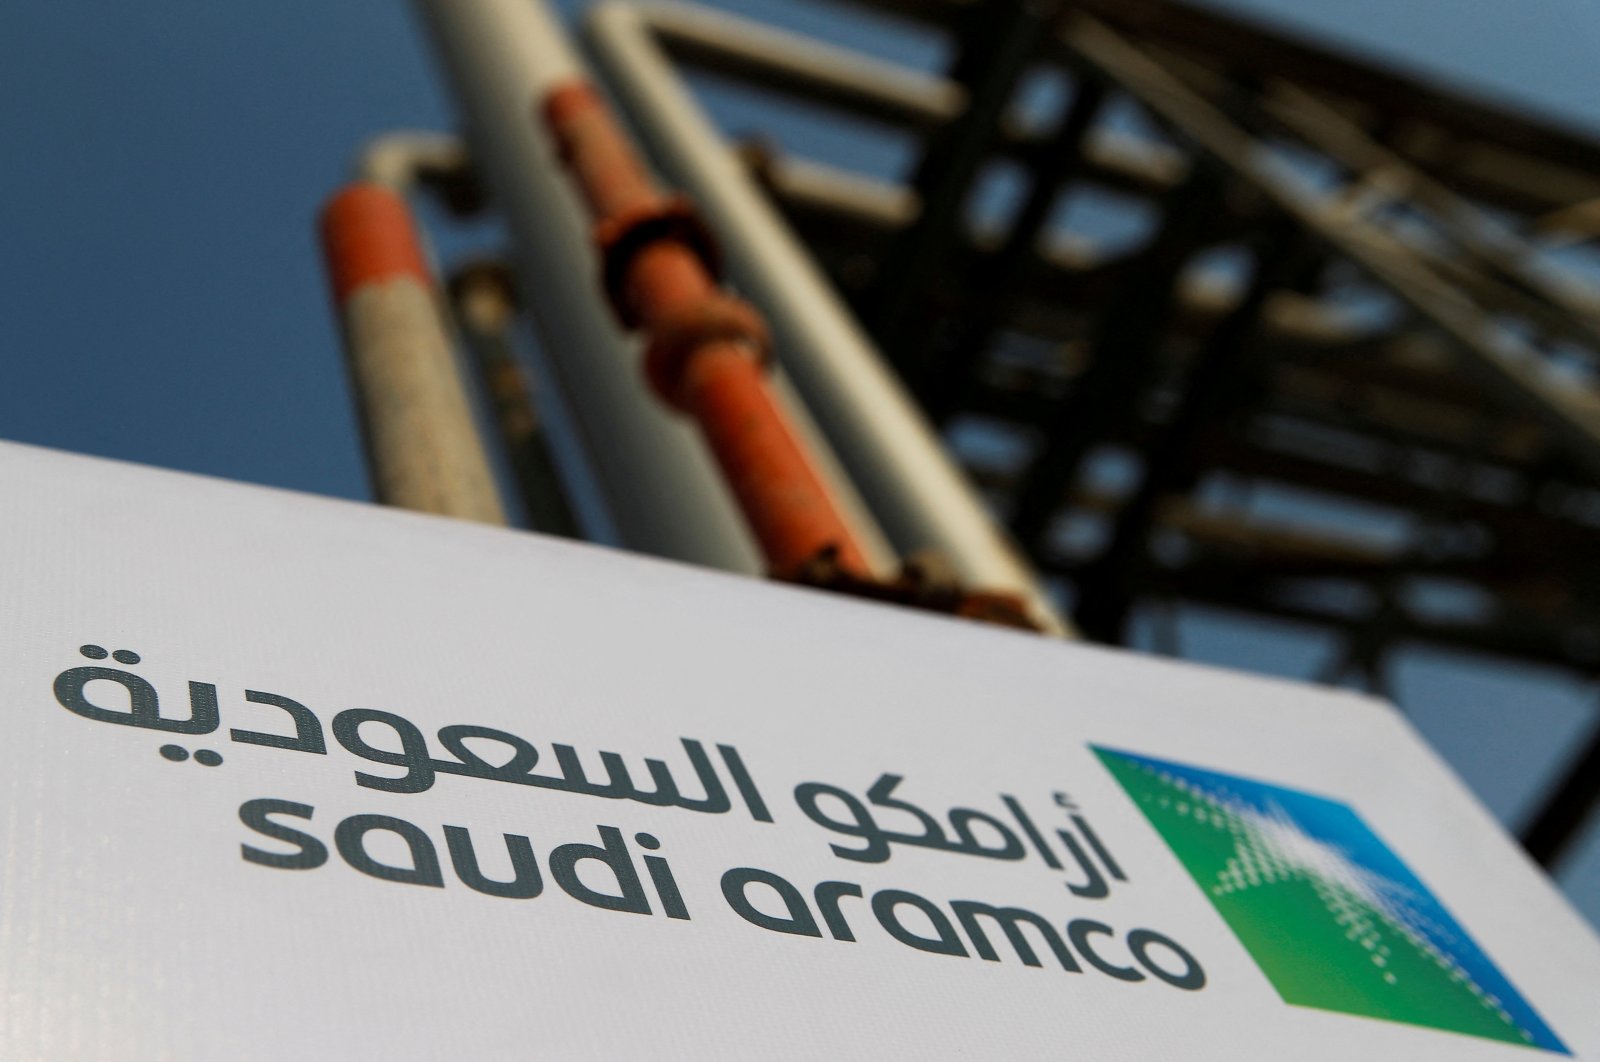 The Saudi Aramco logo is pictured at the oil facility in Abqaiq, Saudi Arabia, Oct. 12, 2019. (Reuters Photo)